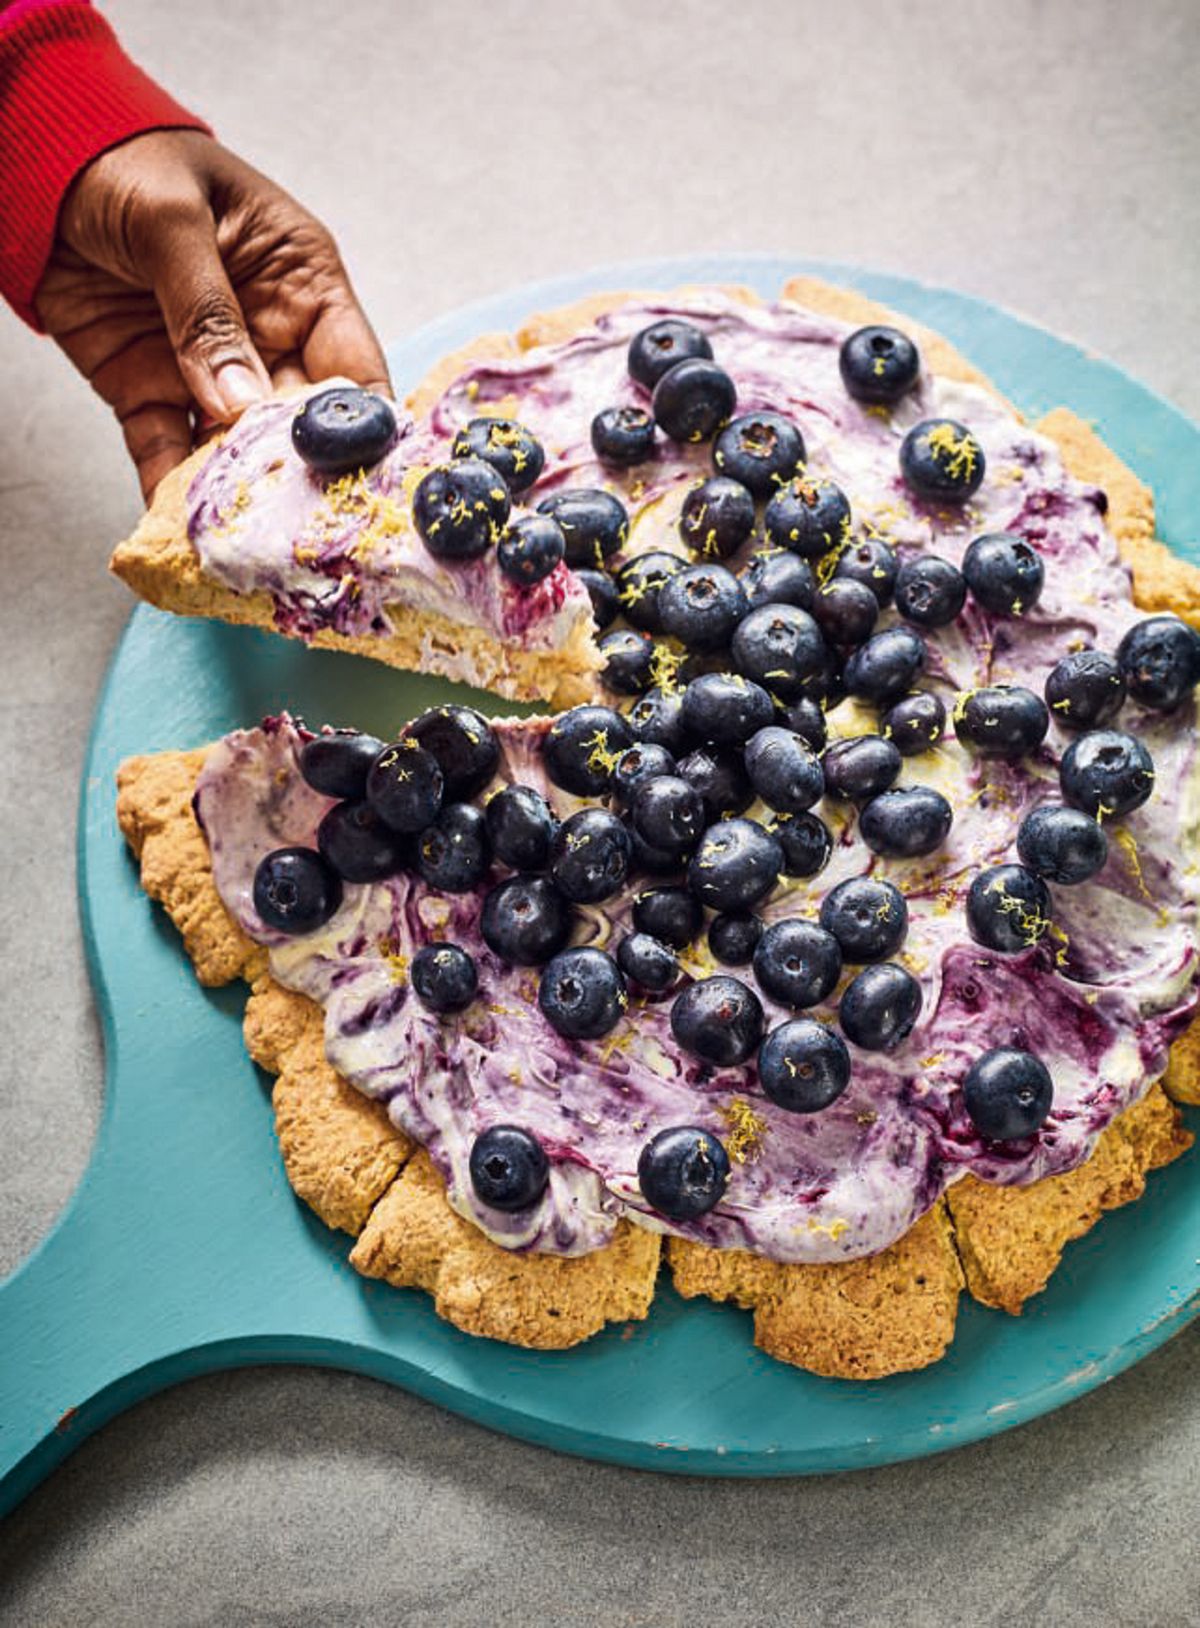 Nadiya Hussain’s Blueberry and Lavender Scone Pizza